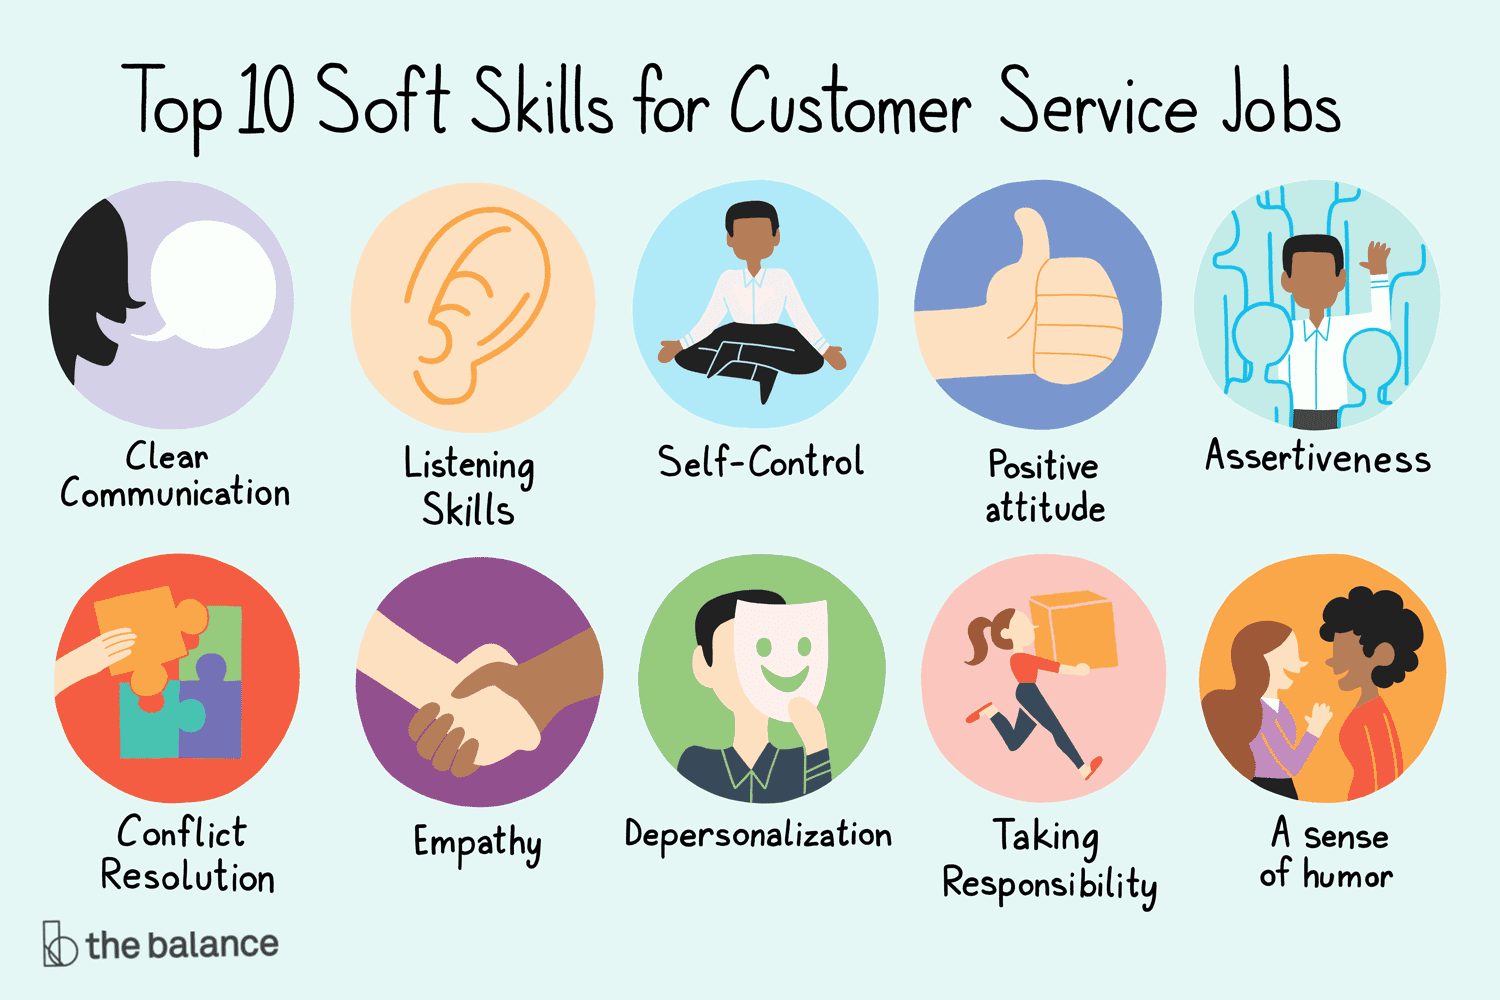 Top 10 Soft Skills for Customer Service Jobs